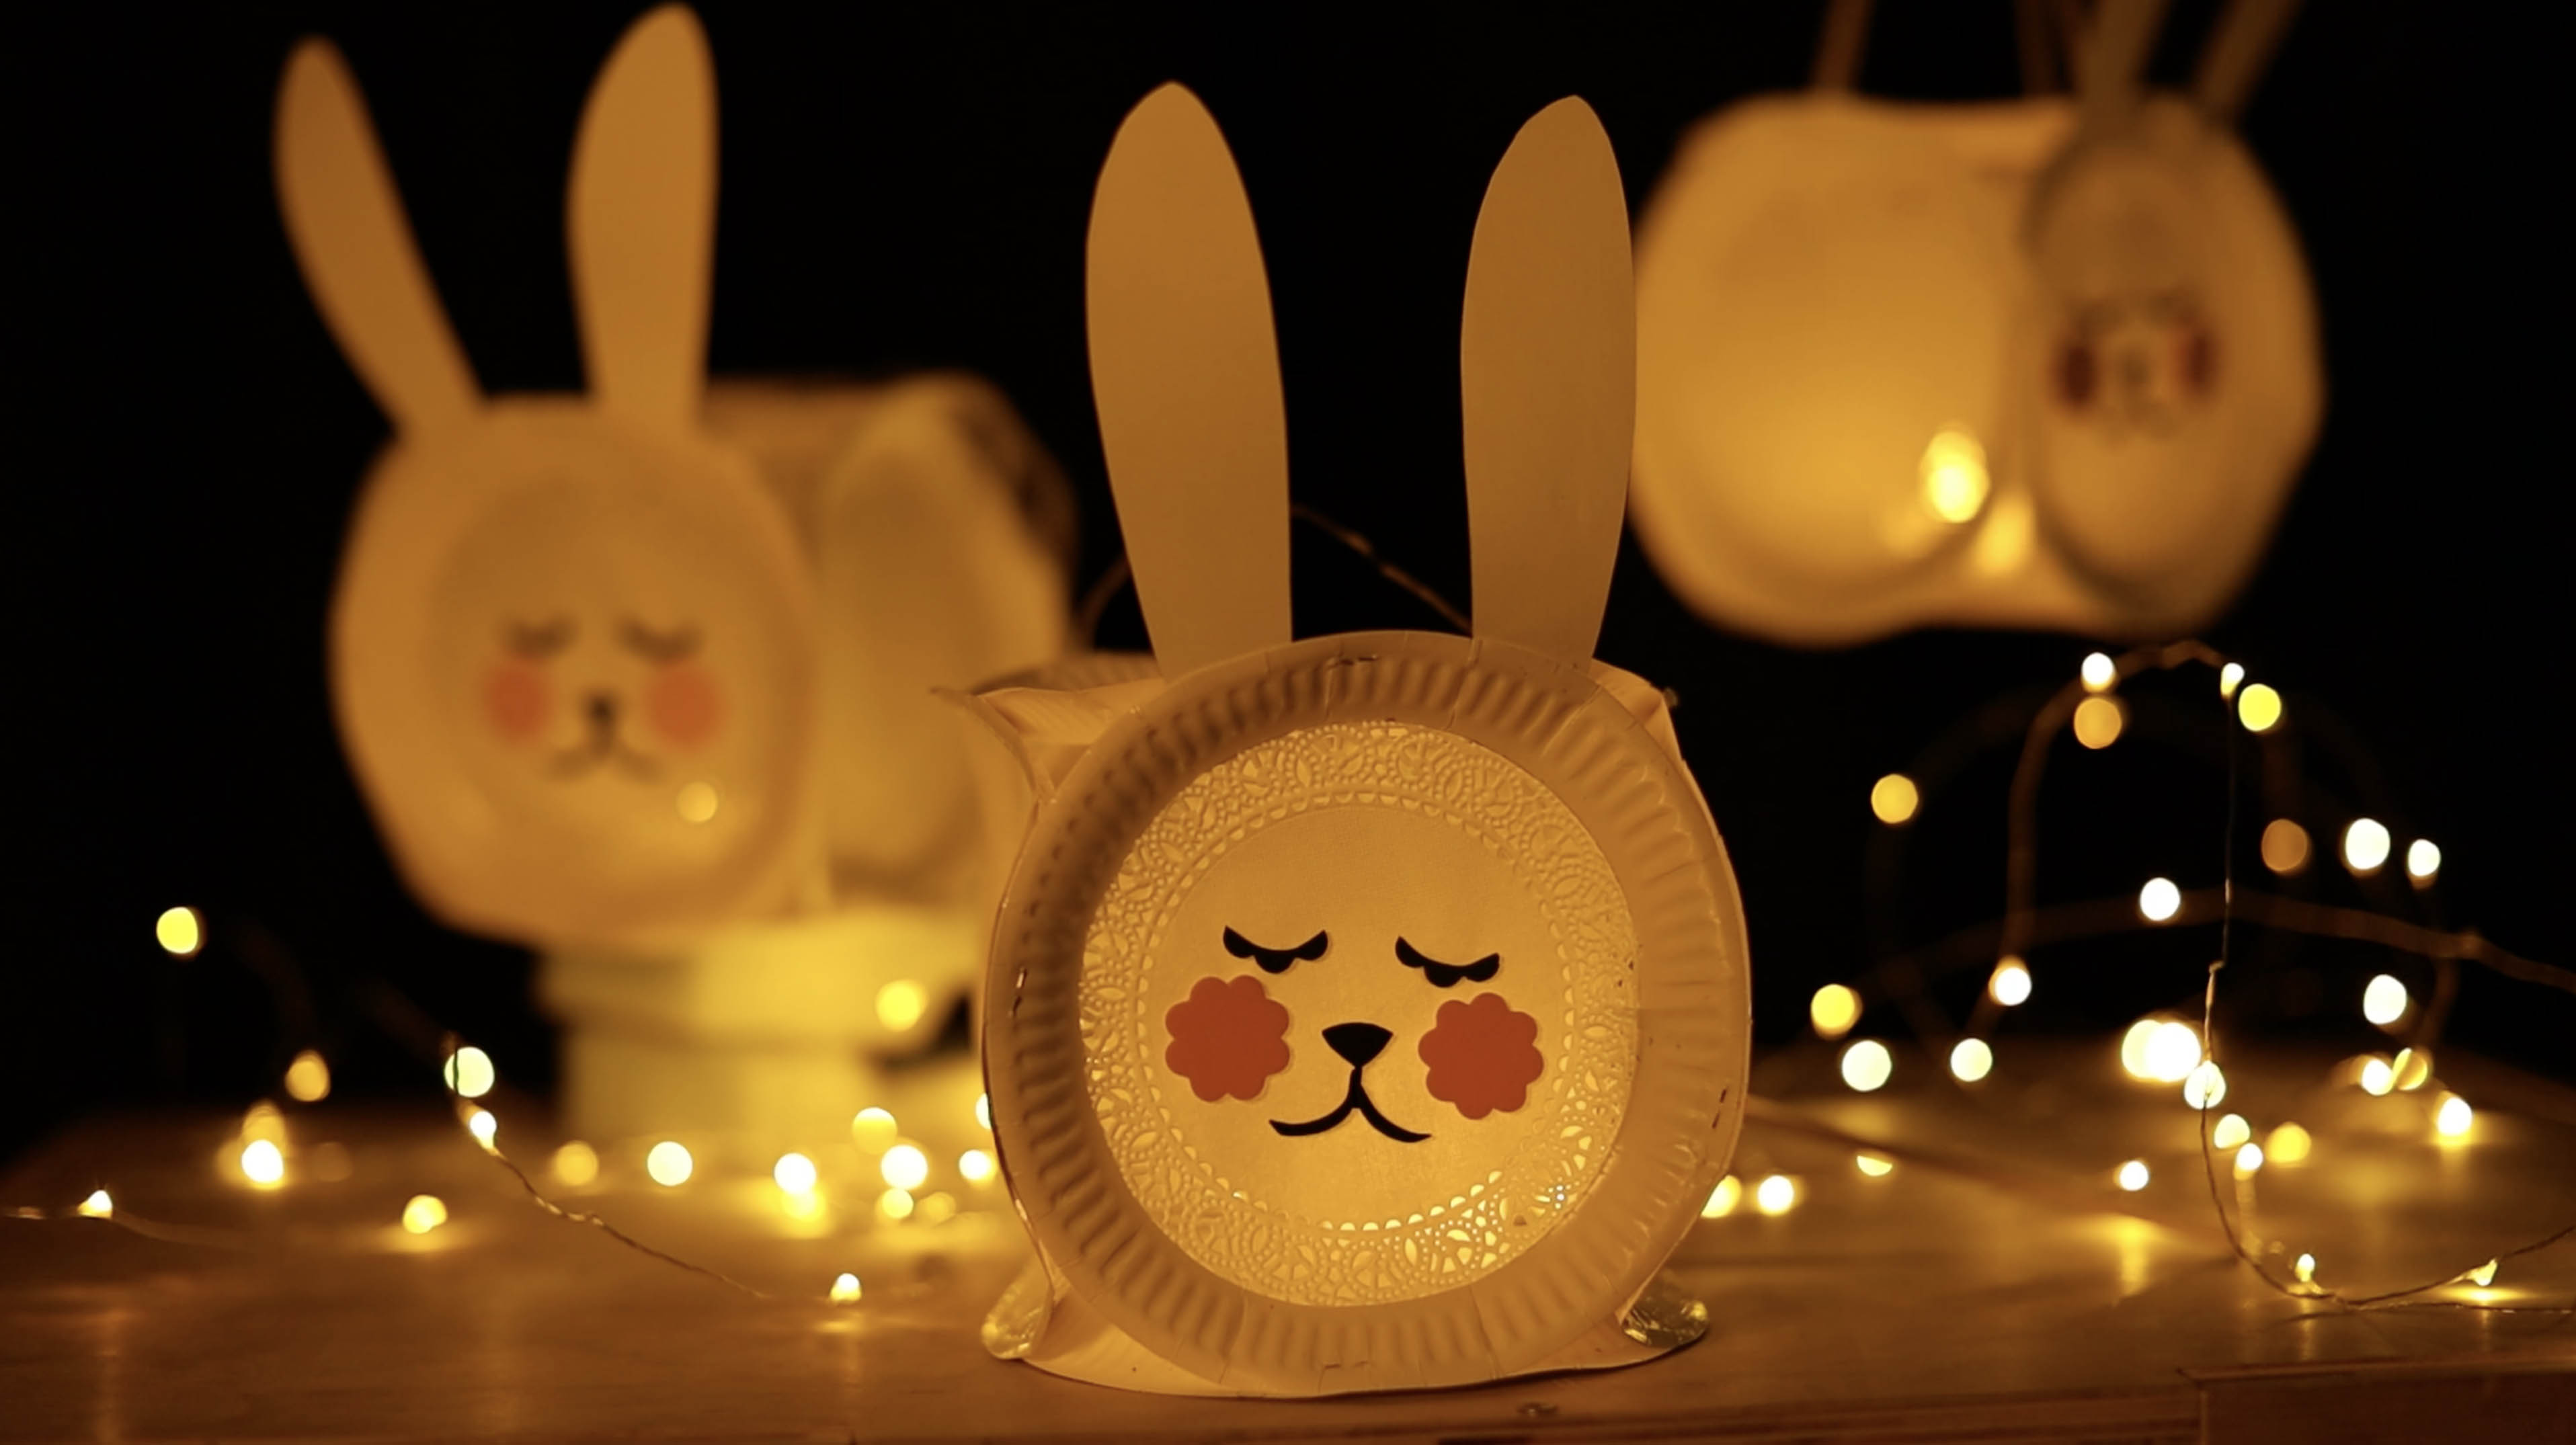 https://wonderwall.sg/images/default-source/content/dam/wonderwall/images/2019/09/this-sleepy-rabbit-lantern-is-the-perfect-mid-autumn-festival-craft/rabbitlantern_rectangle.jpg?sfvrsn=c07c572c_1